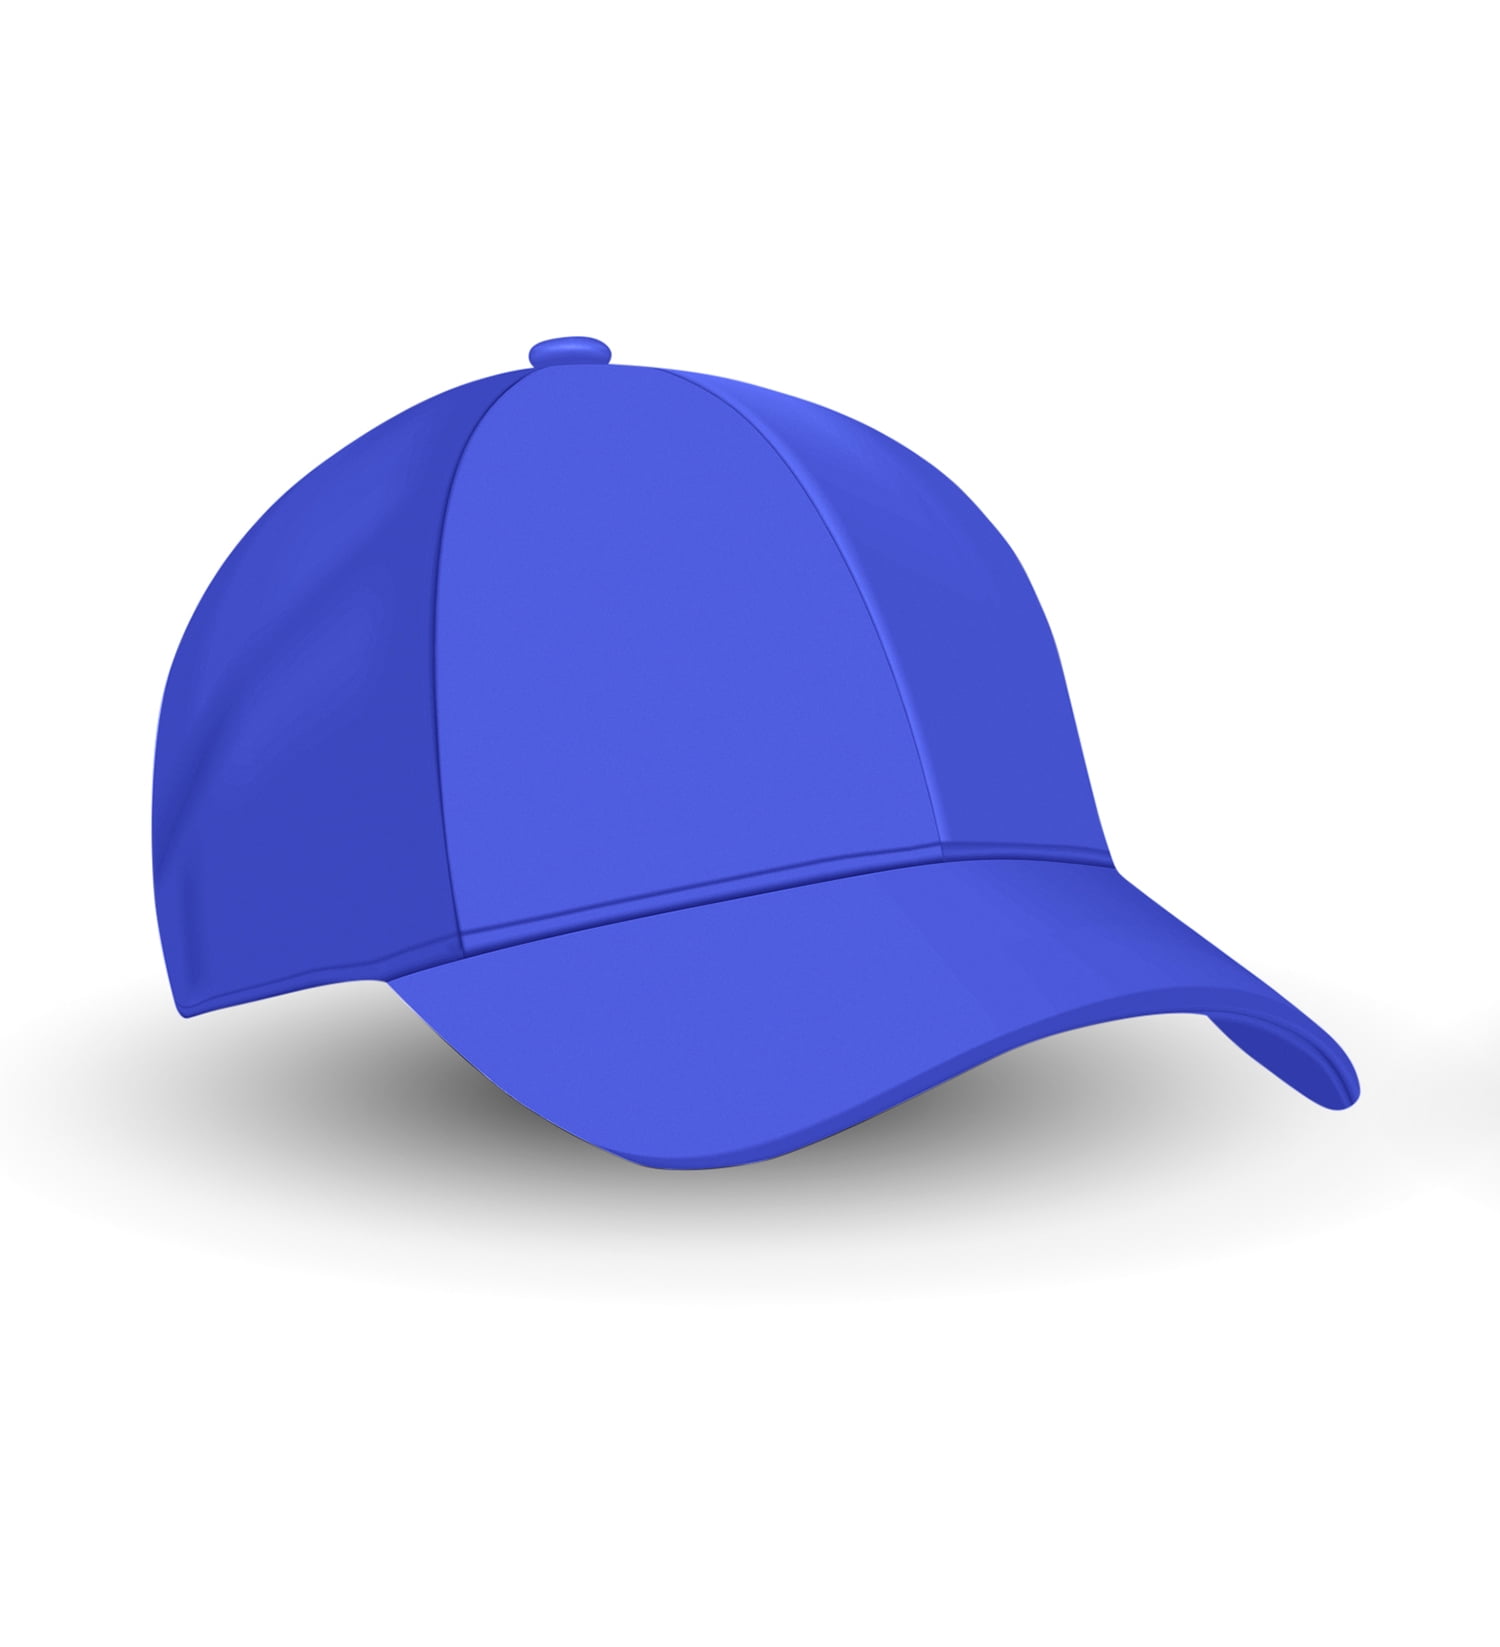 Pack of 15 Bulk Wholesale Plain Baseball Cap Hat Adjustable (Royal